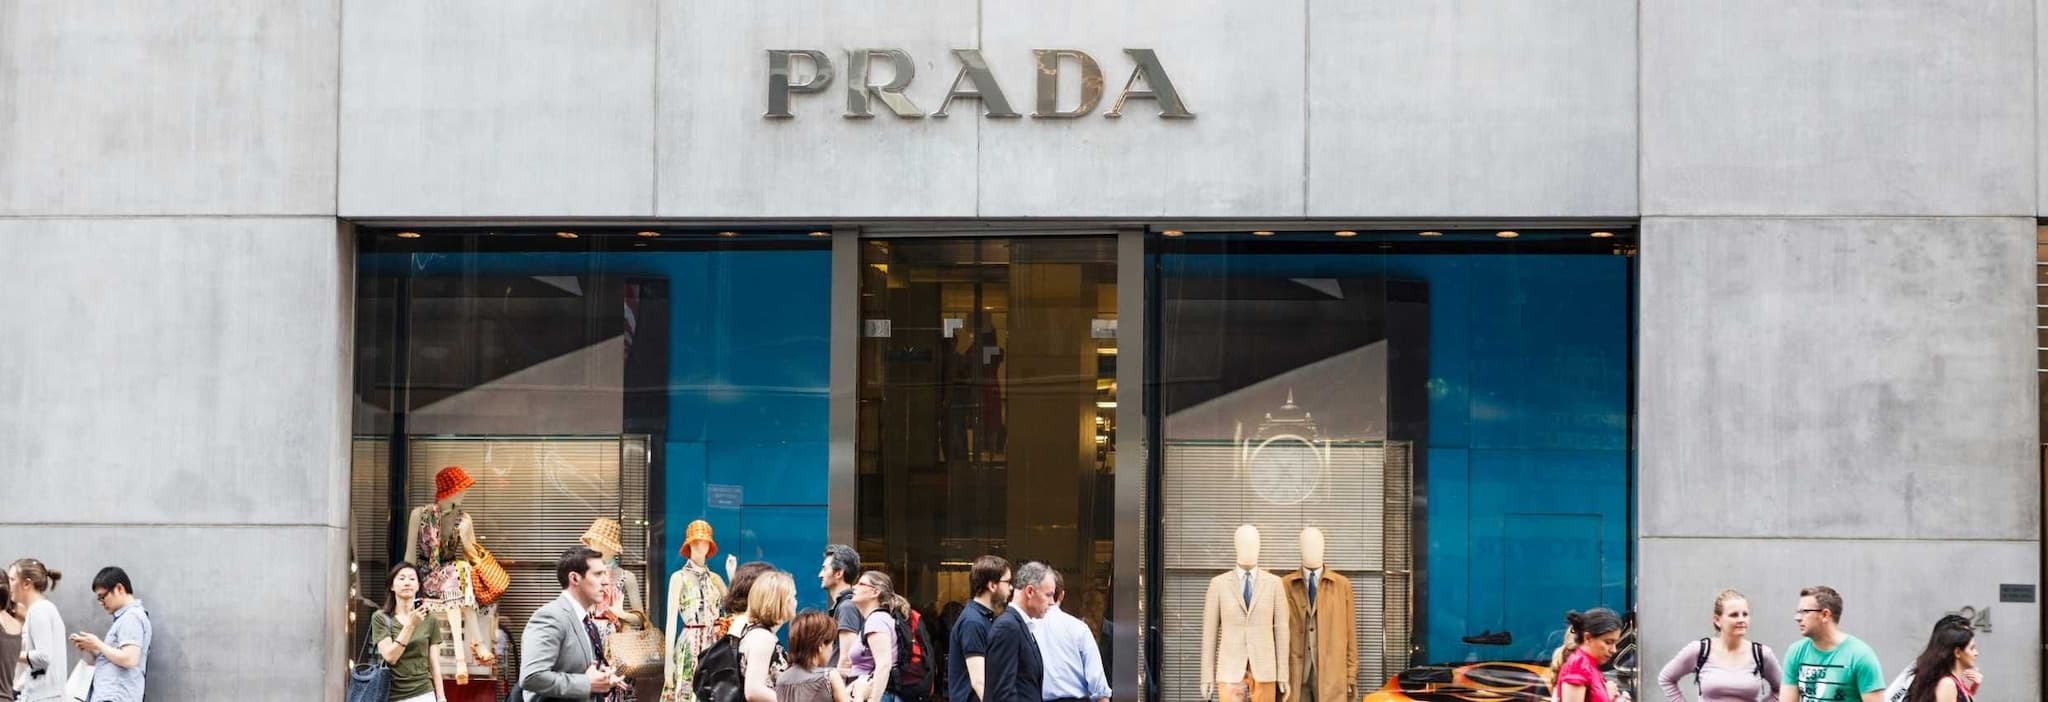 13 cities where the Devil can wear Prada